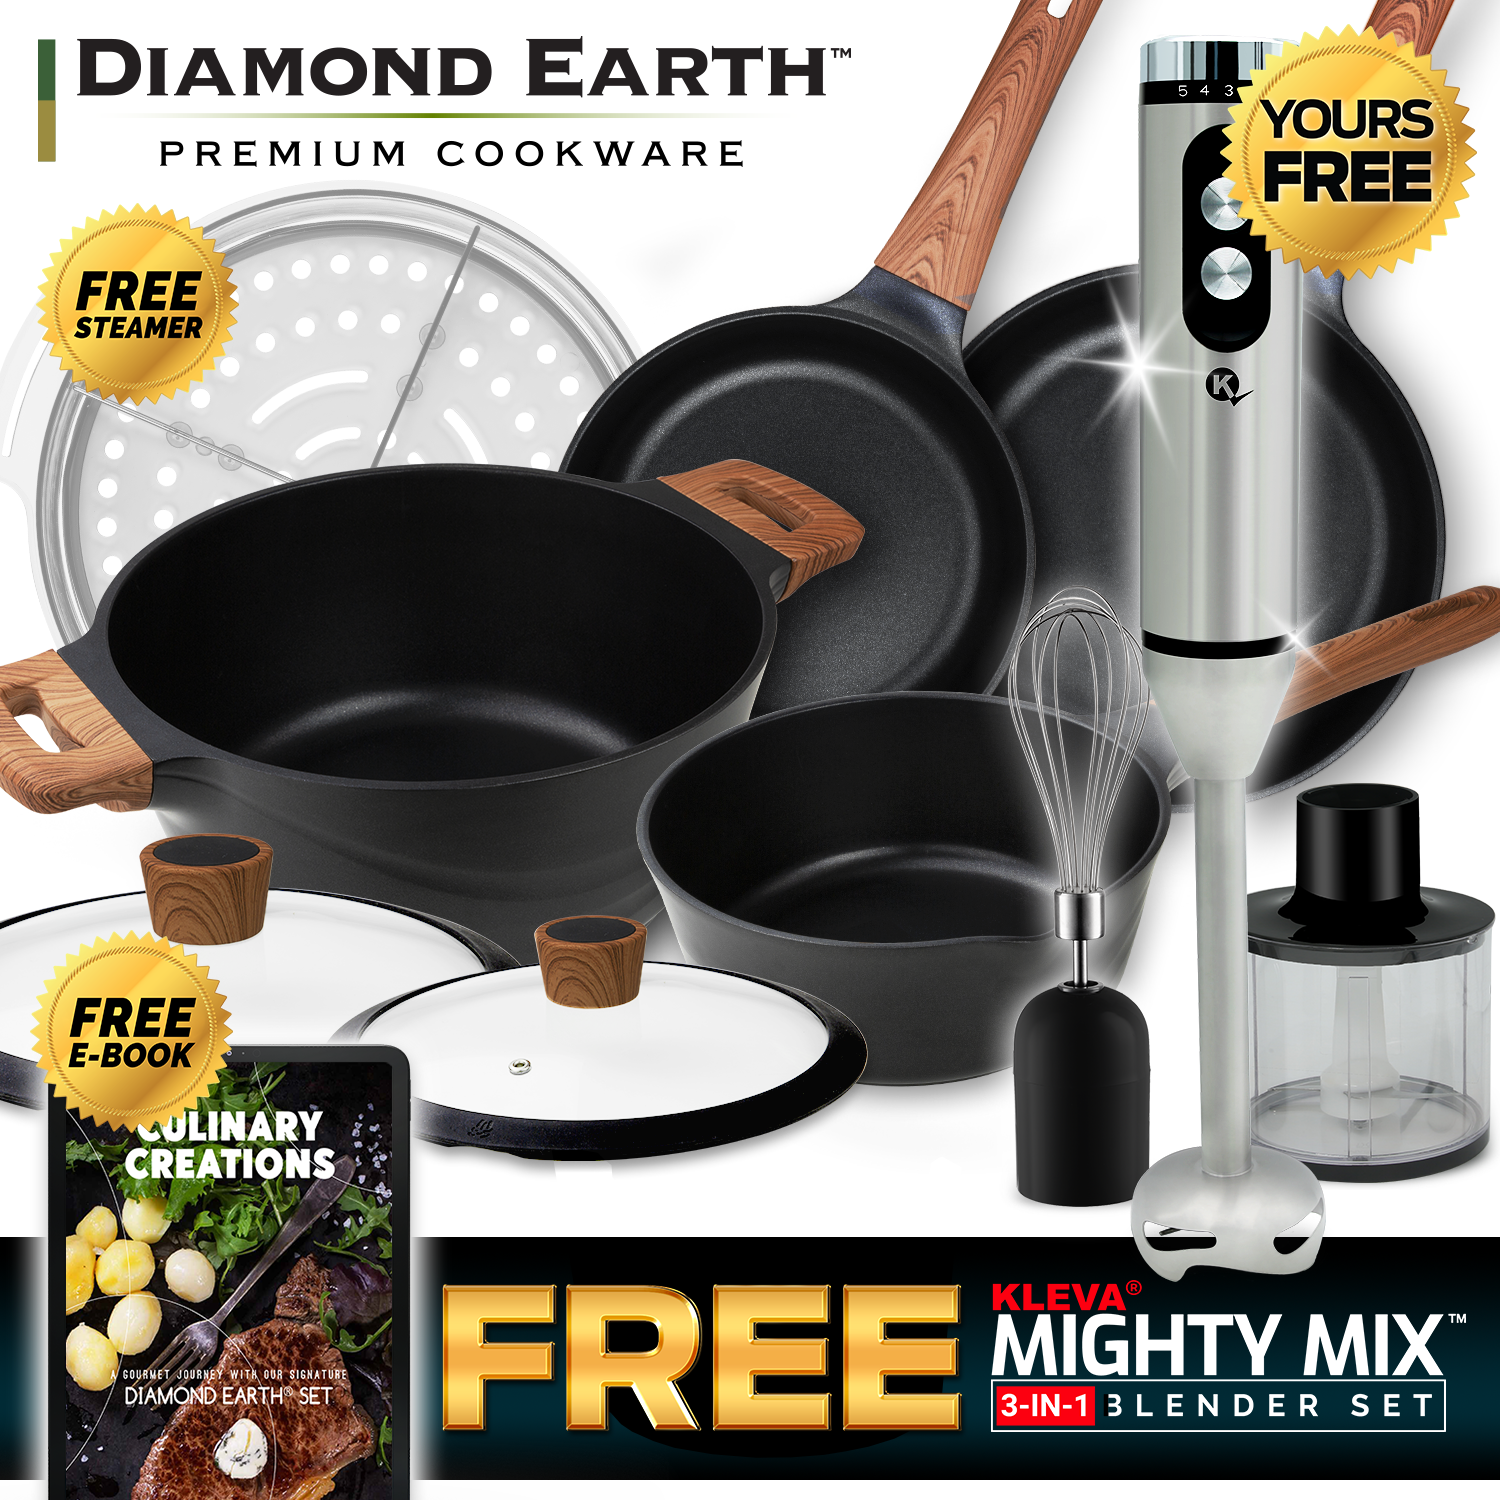 Diamond Earth® Premium Cookware Set with Superior Non-Stick Coating + FREE E-BOOK + FREE Gifts!